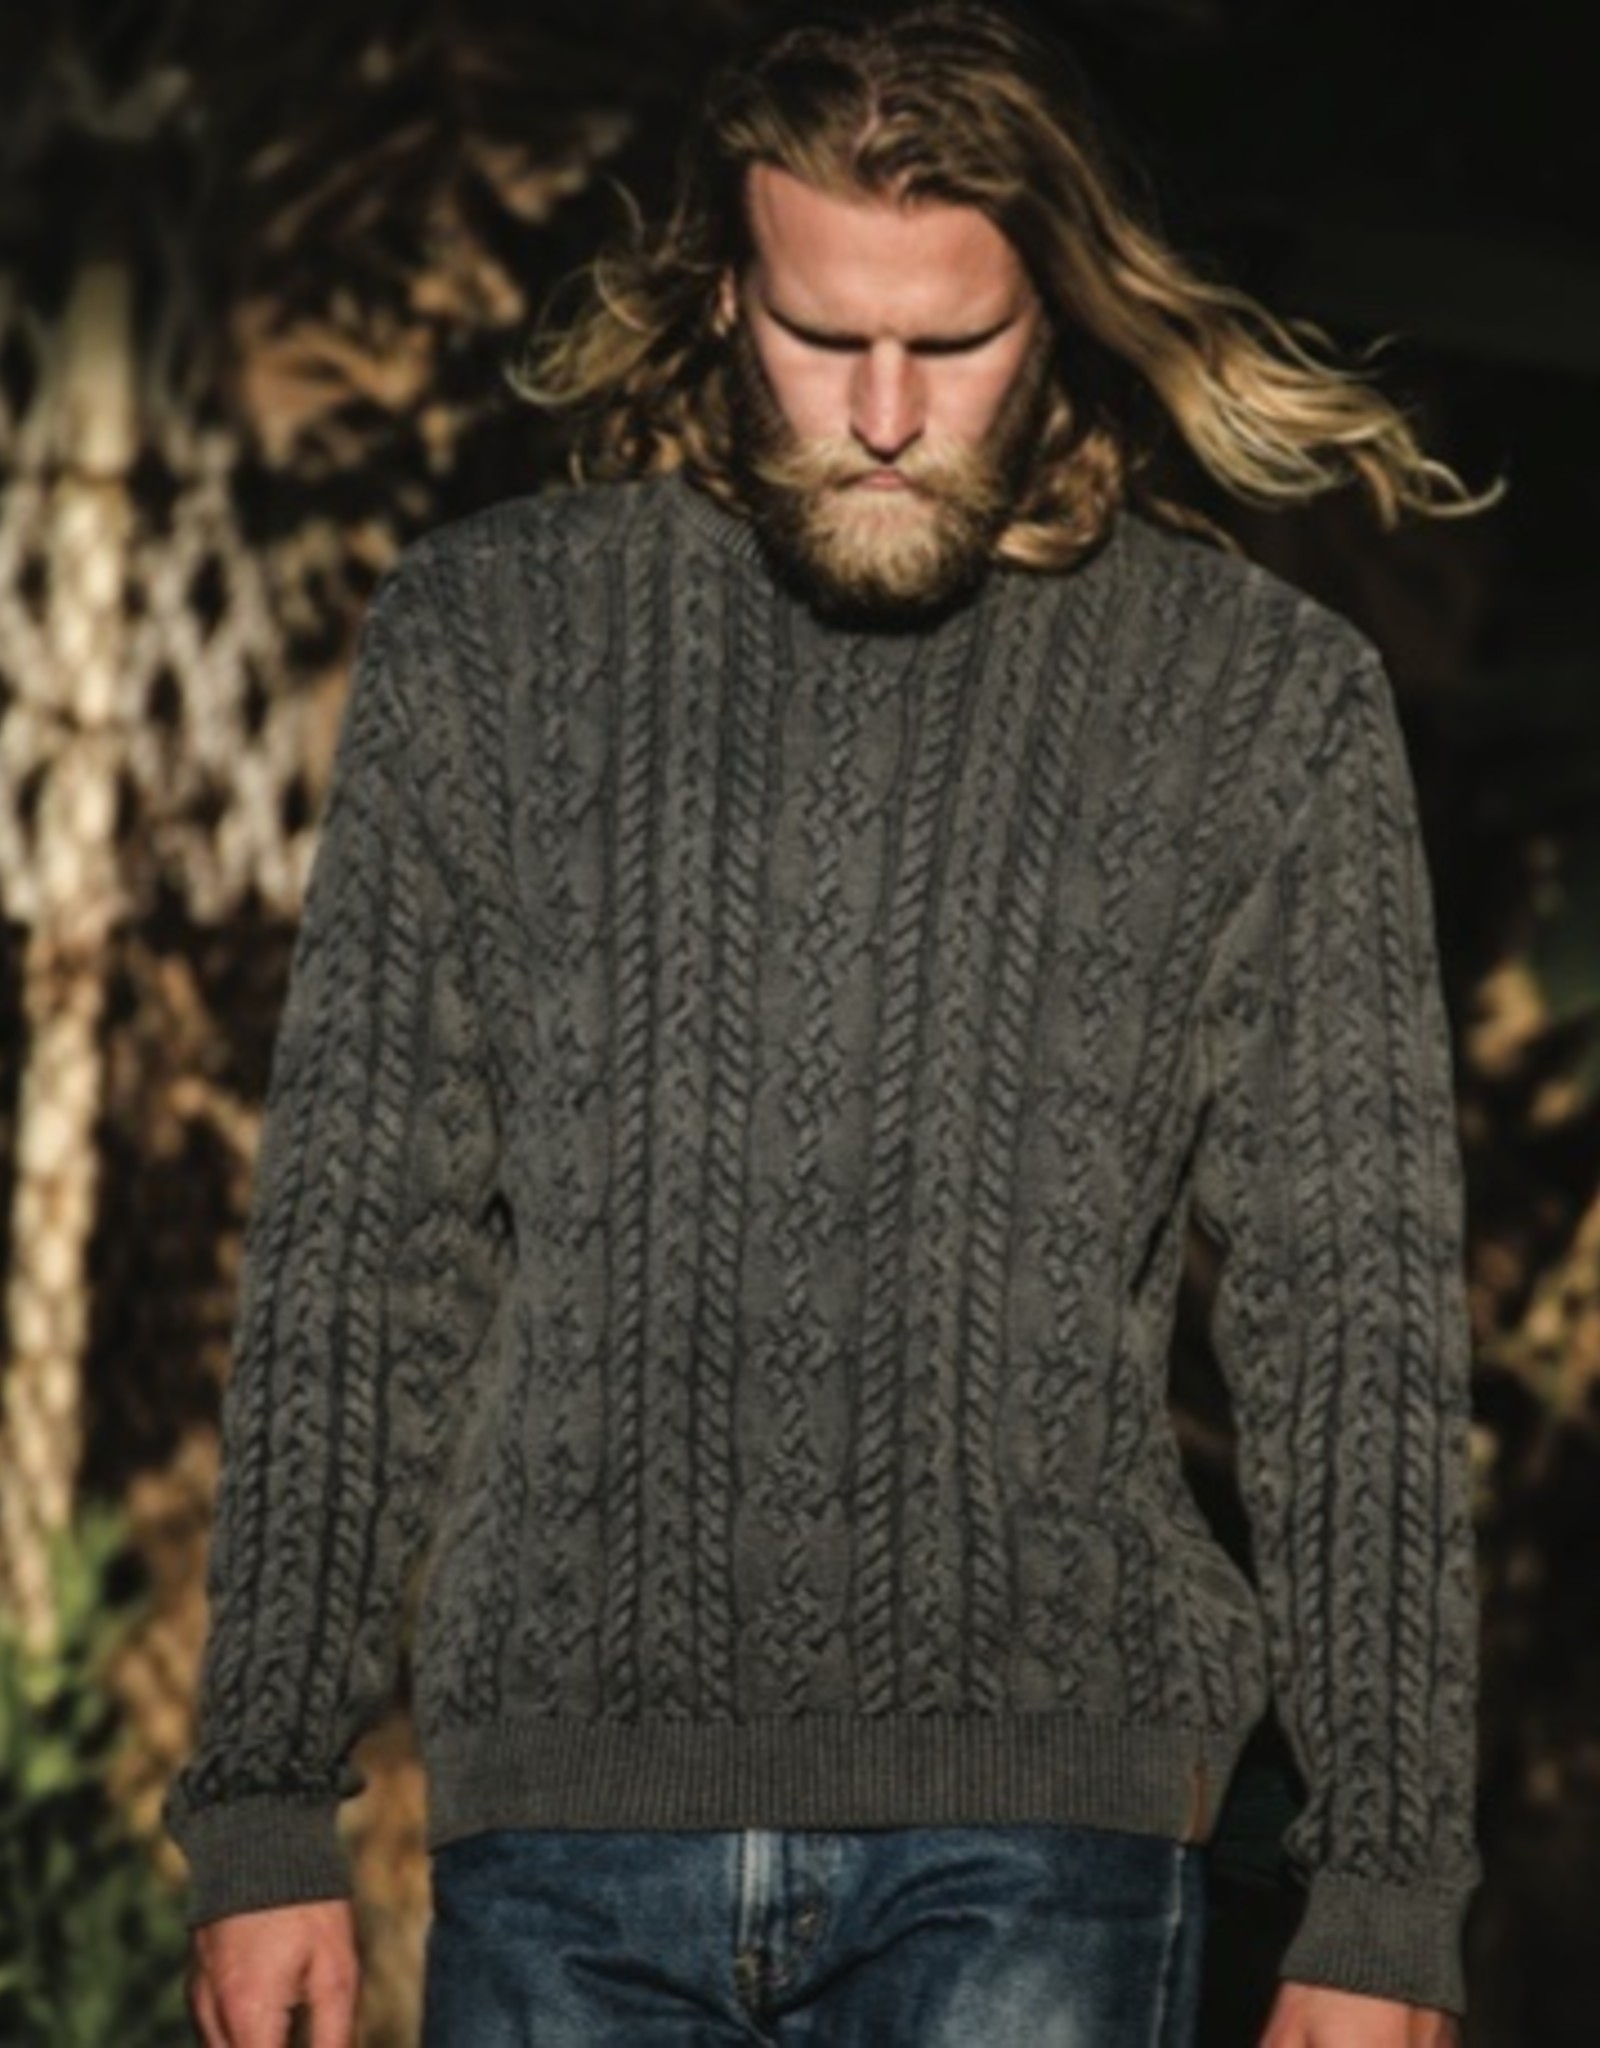 Katin USA Fisherman Sweater